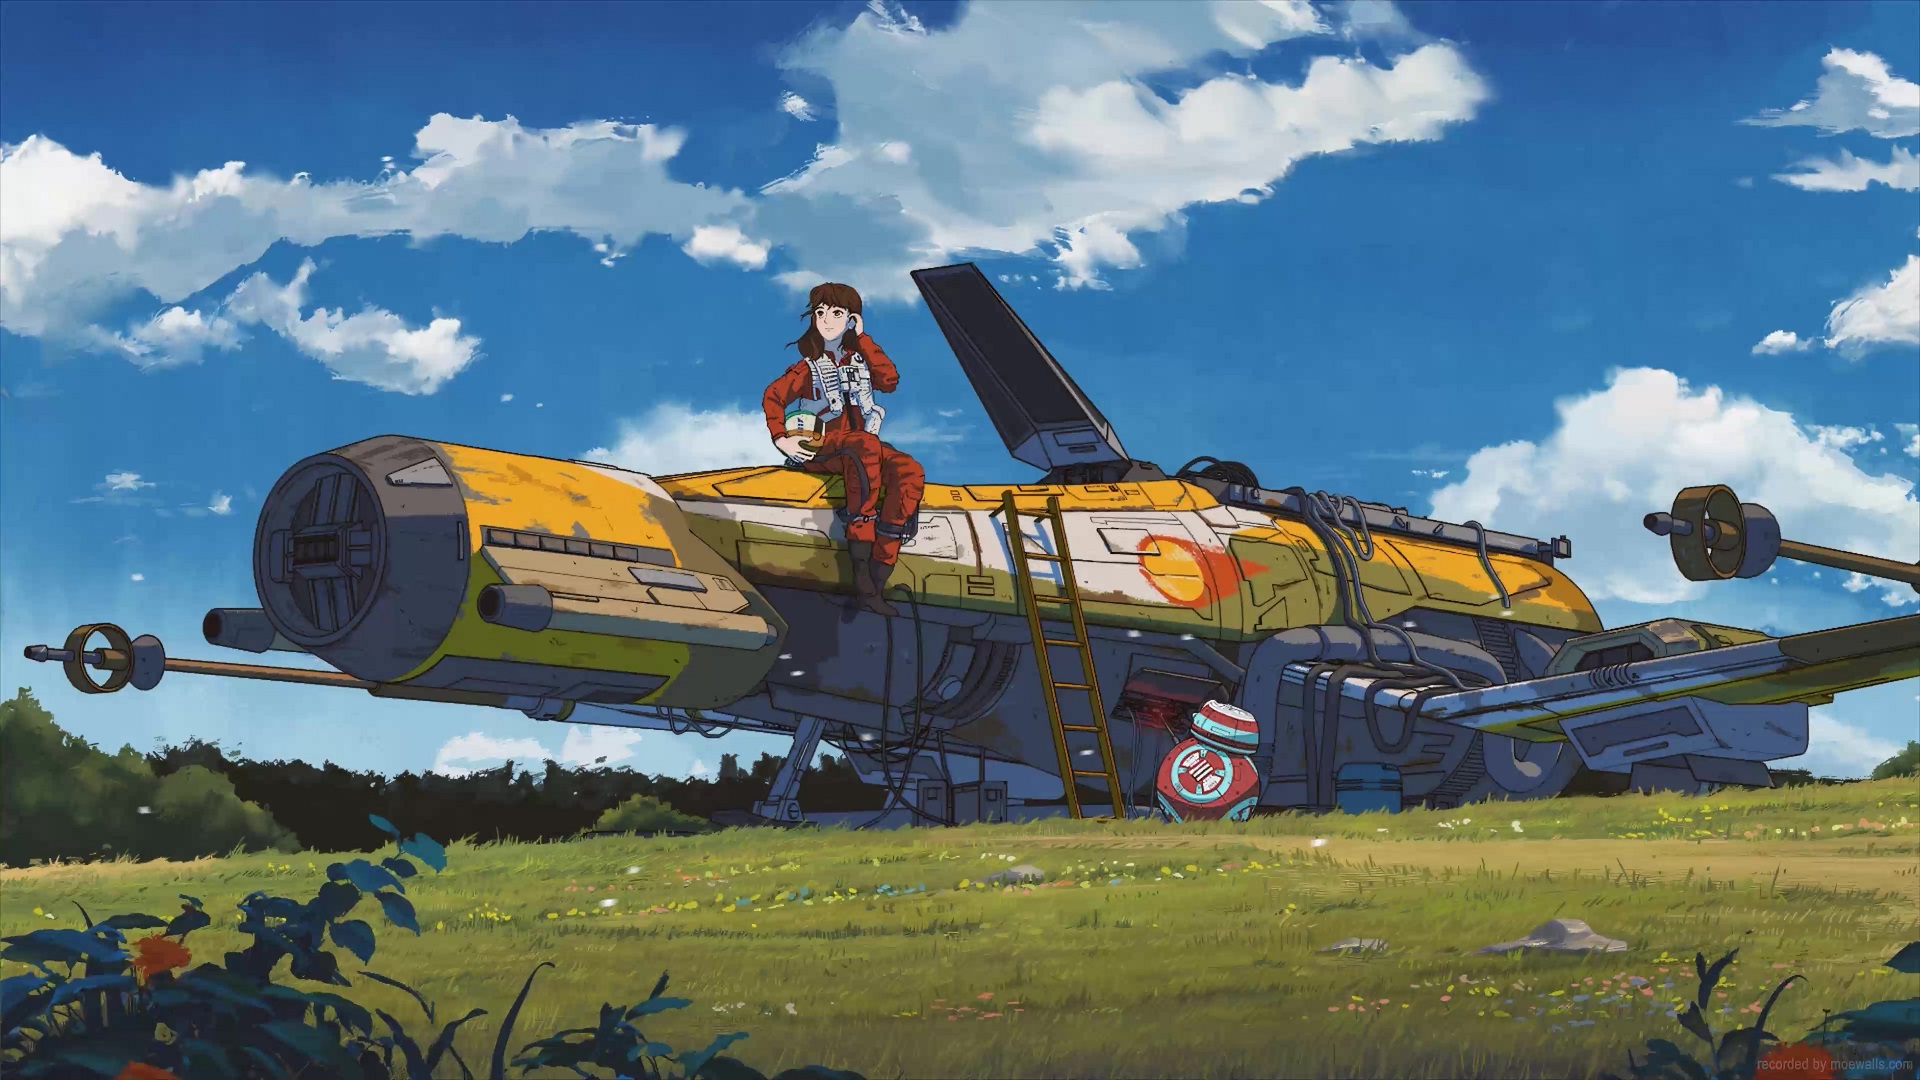 37 Ghibli Live Wallpapers, Animated Wallpapers - MoeWalls